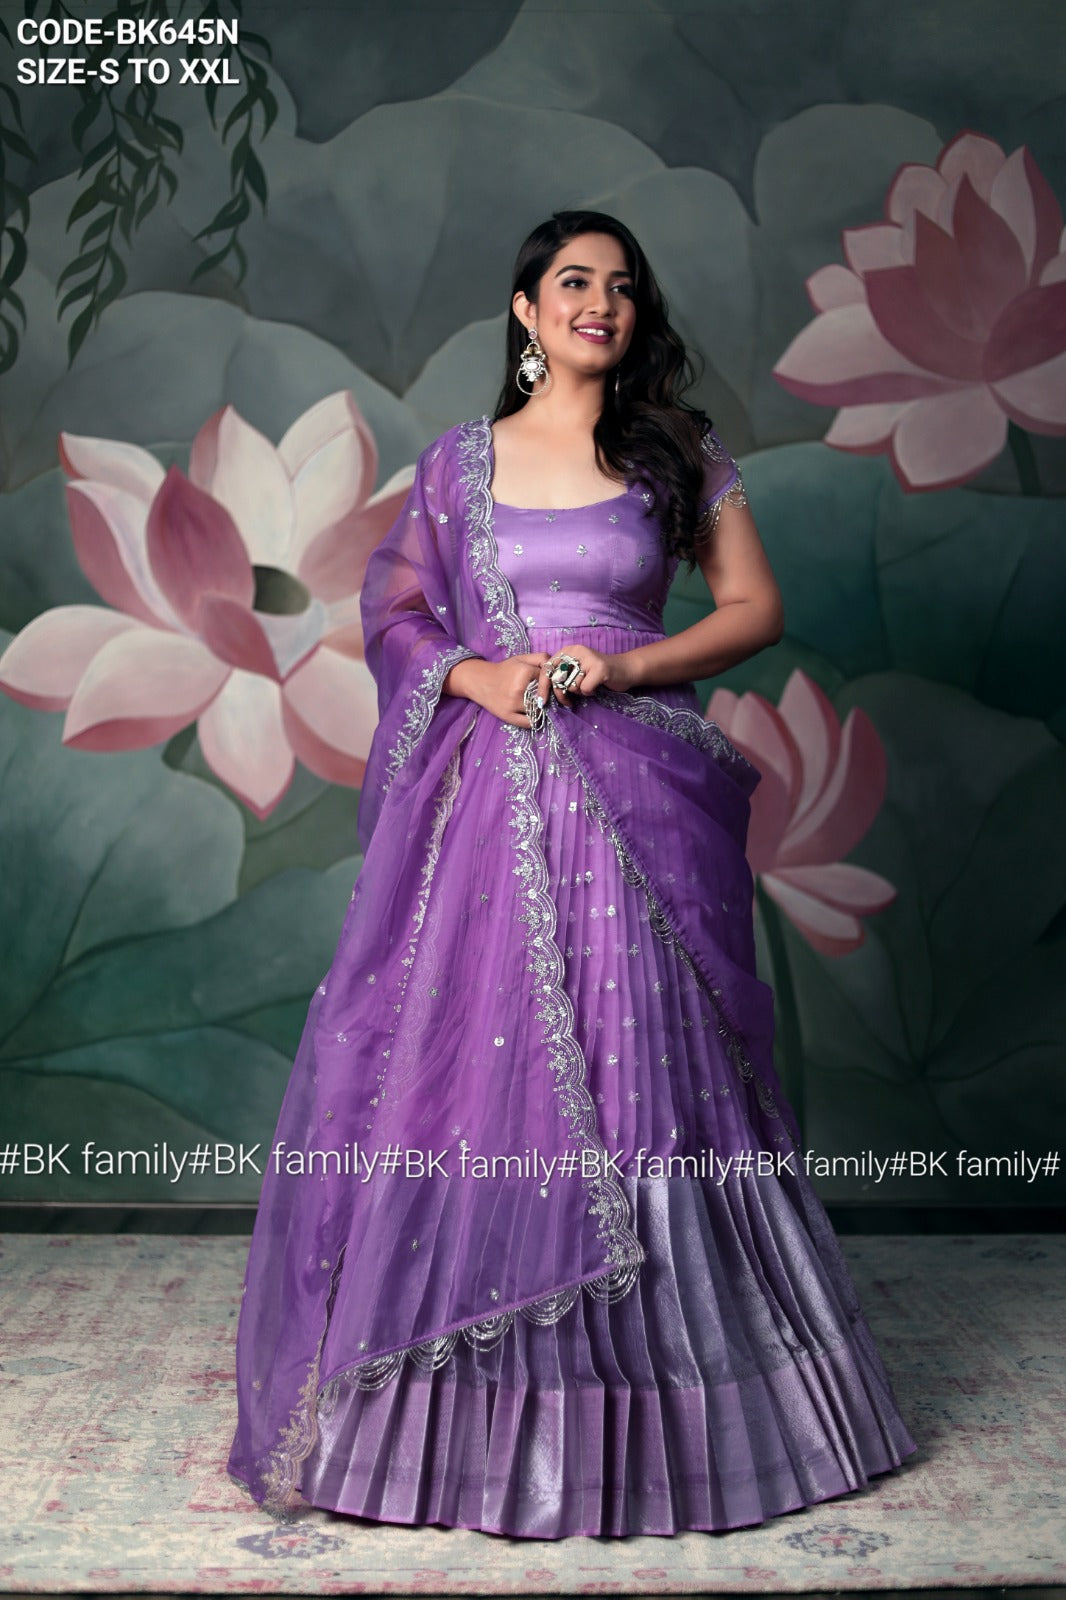 Charming Lilac Organza Dresss